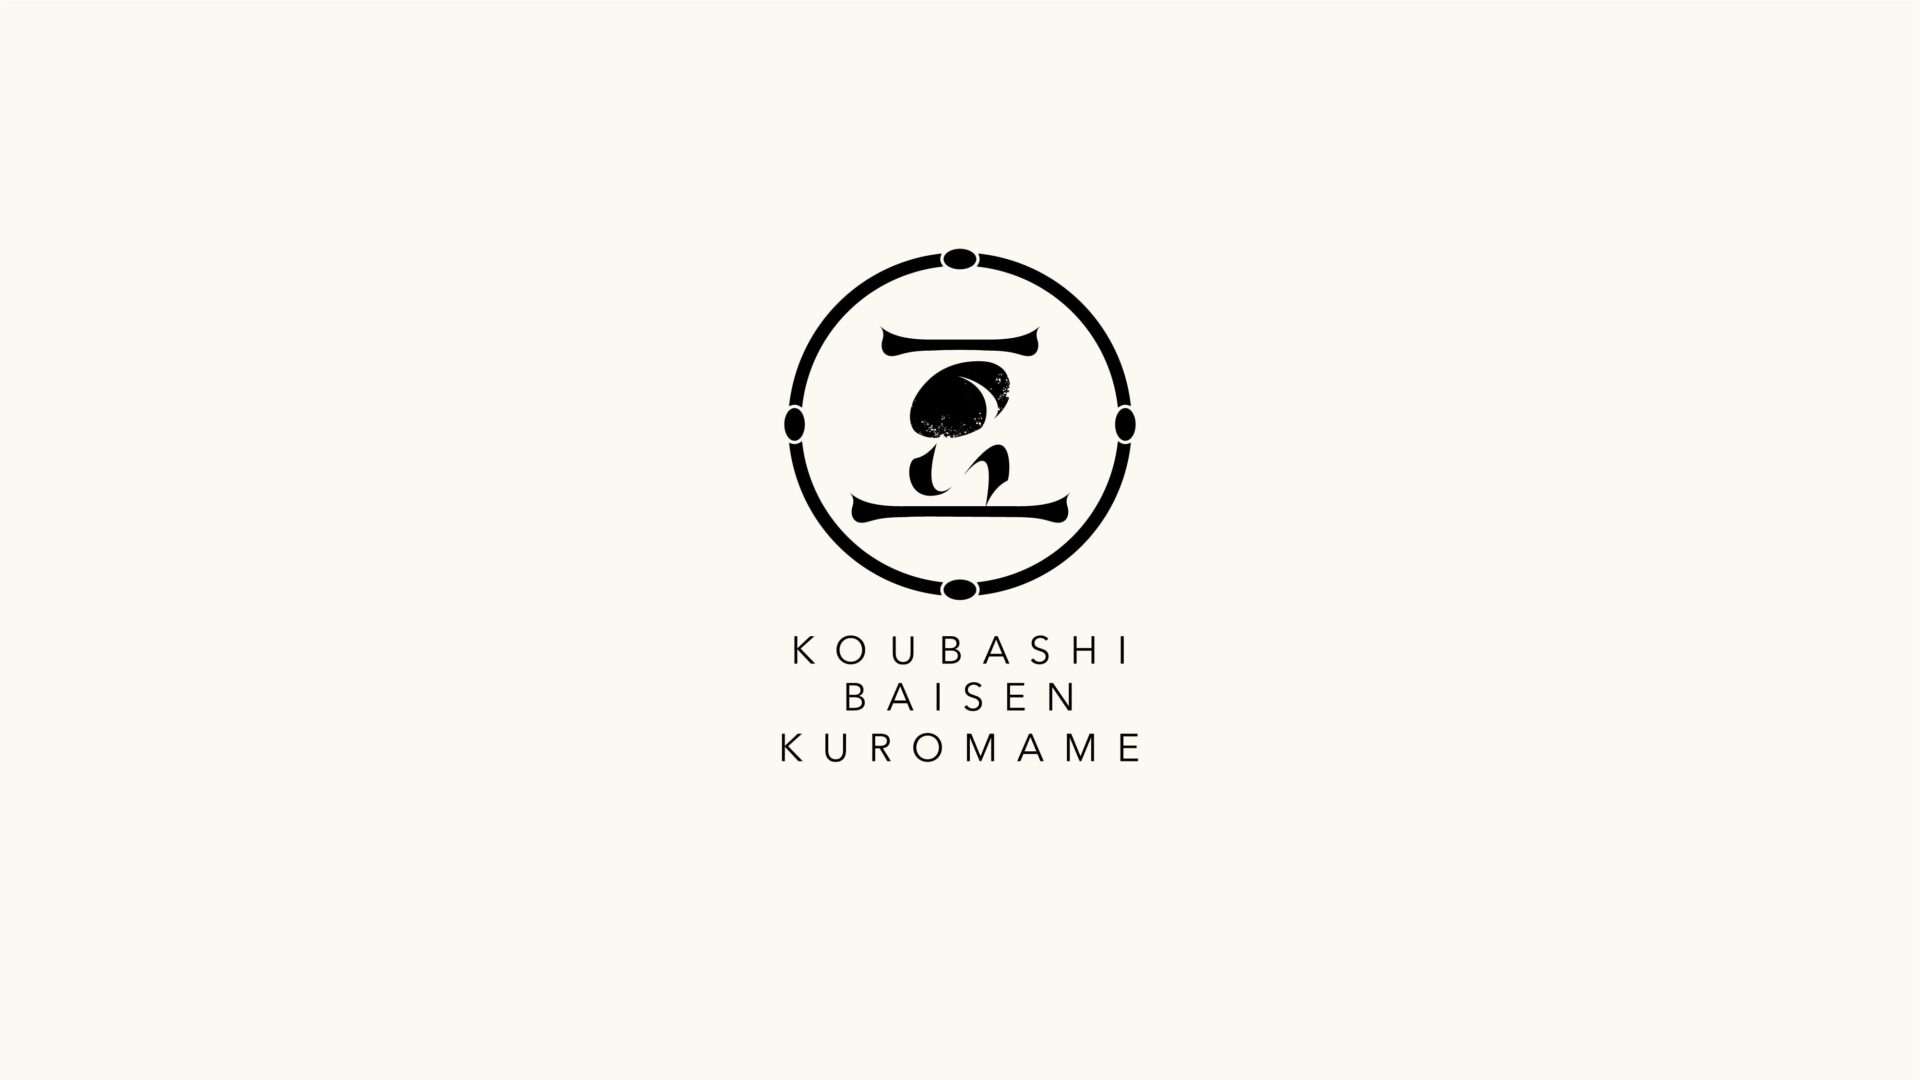 「KURODAMARU」のサムネイル画像